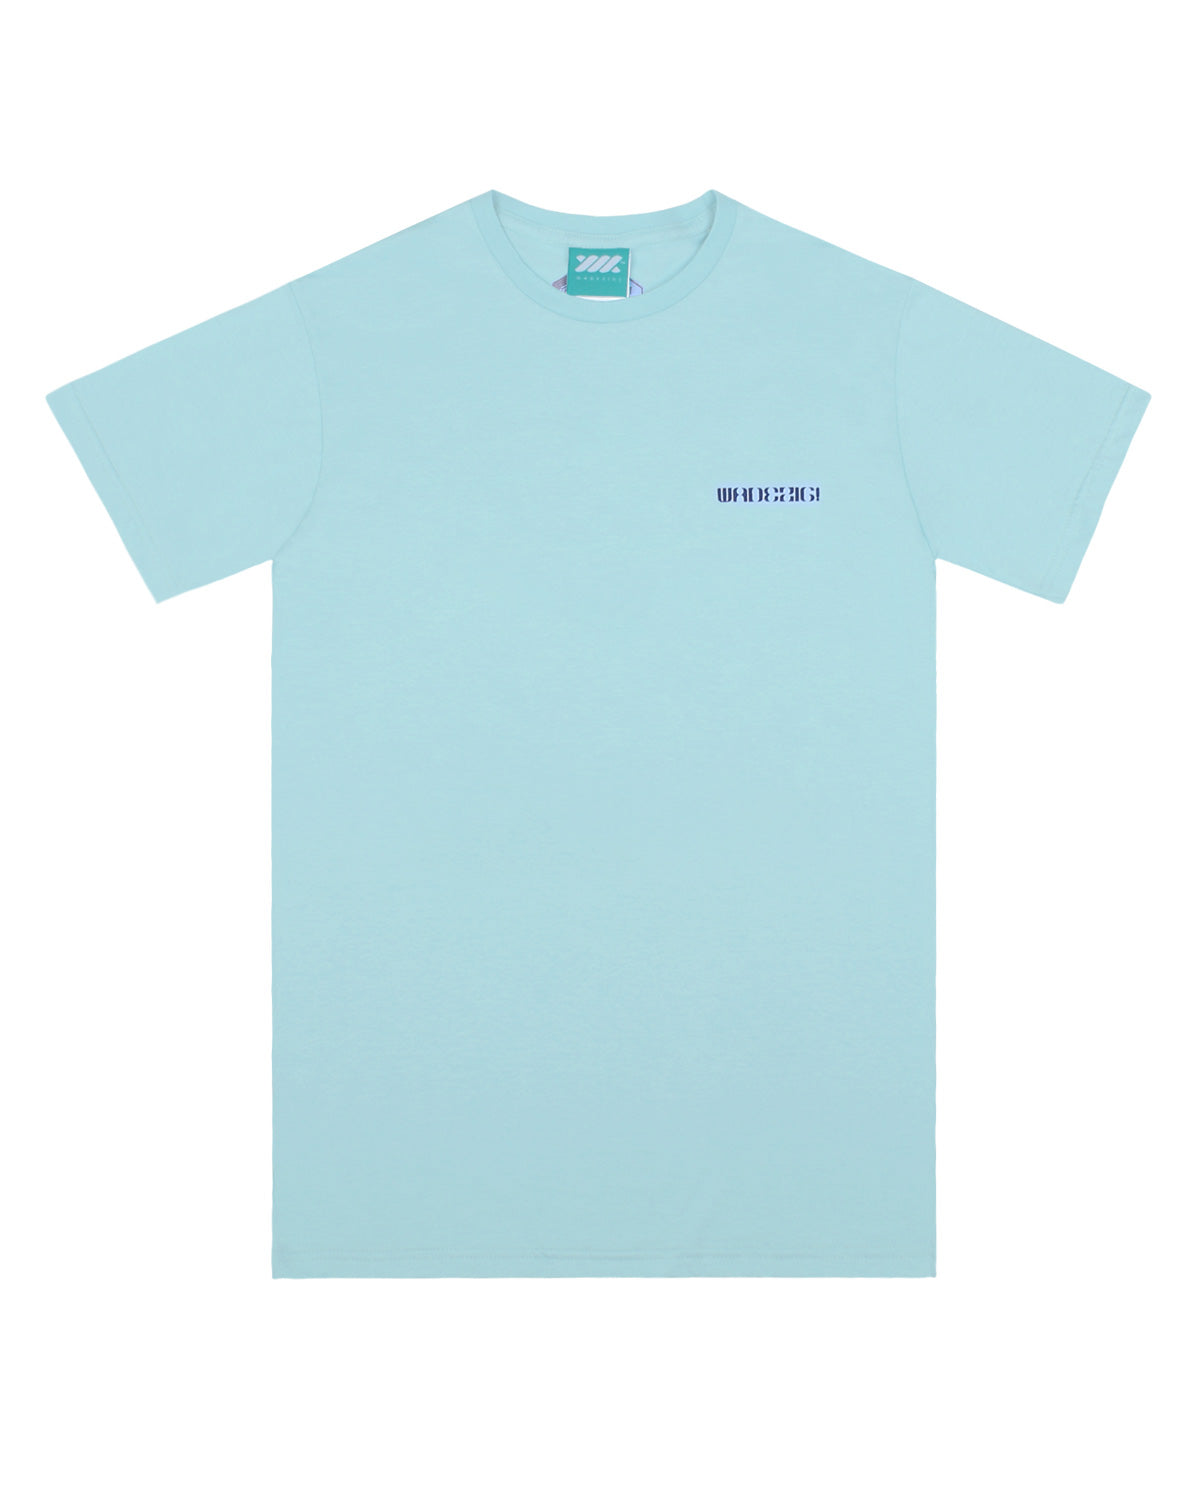 Wadezig! T-Shirt - Pastime Light Blue